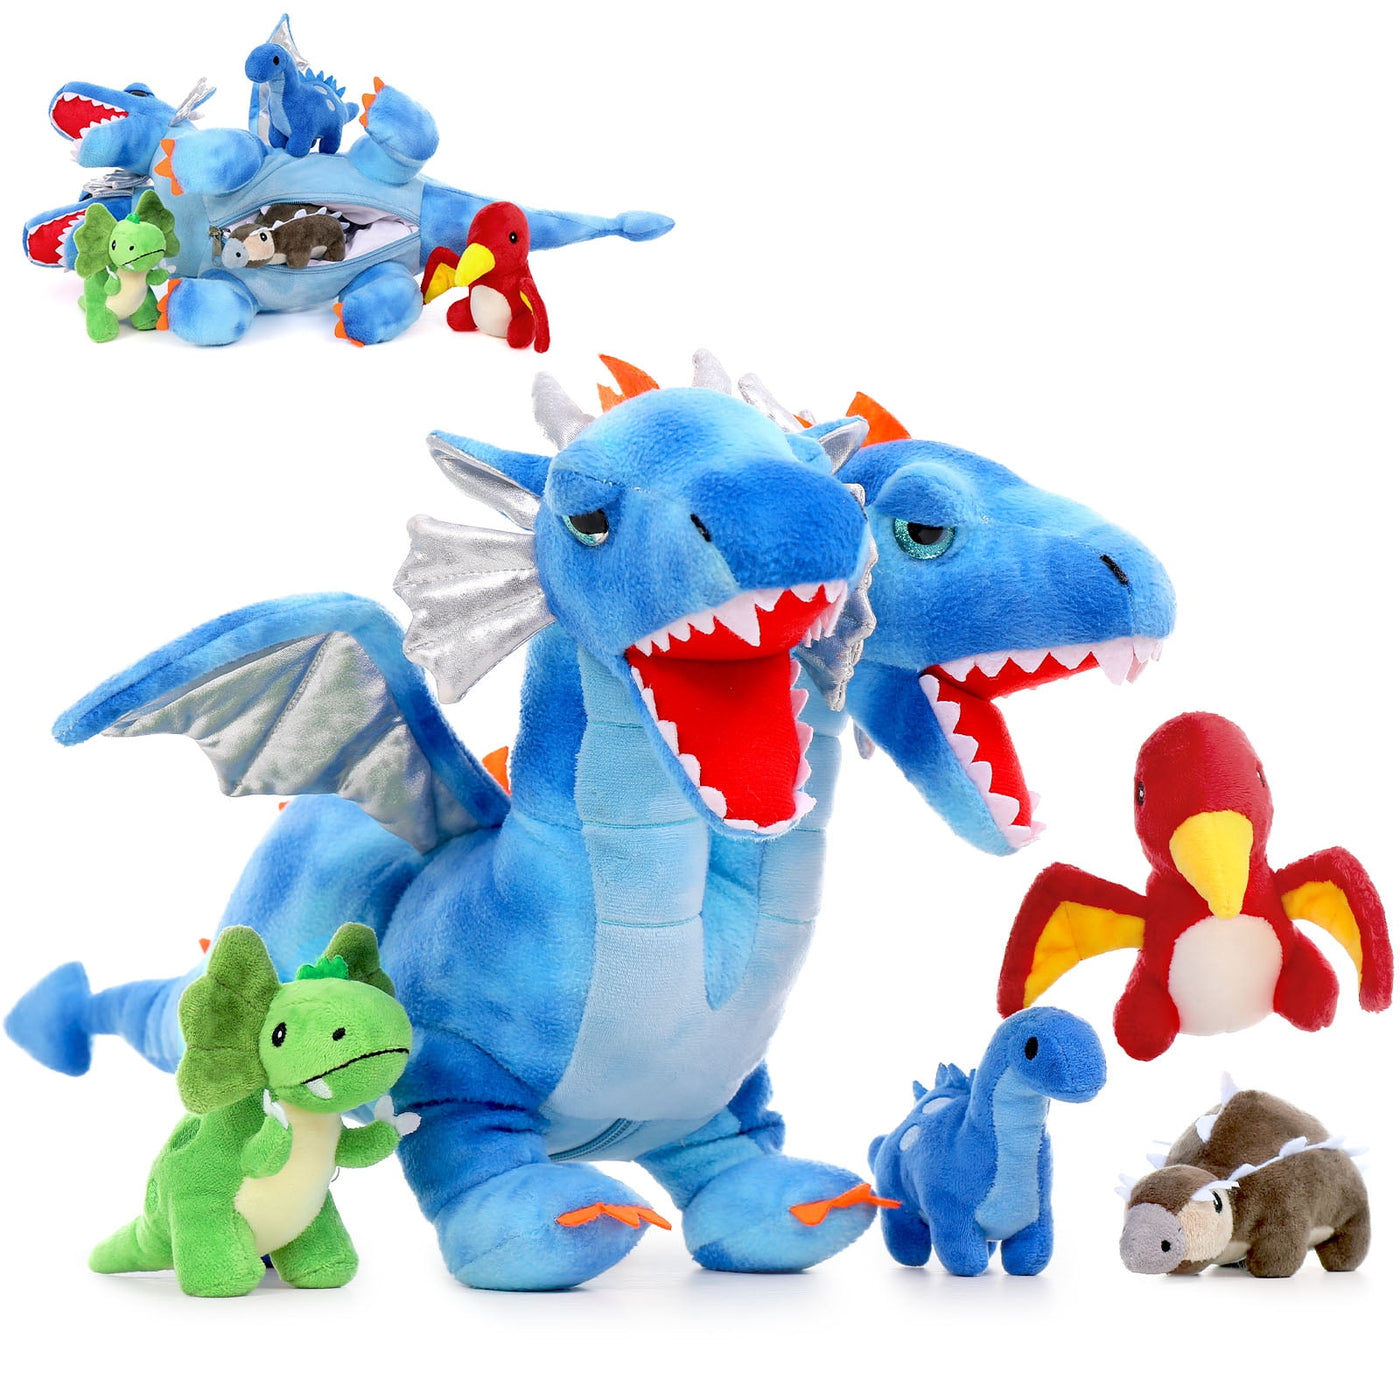 MaoGoLan 5 PCs Double Headed Dragon Stuffed Animals 21" Mommy Dragon with 4 Baby Dinosaurs